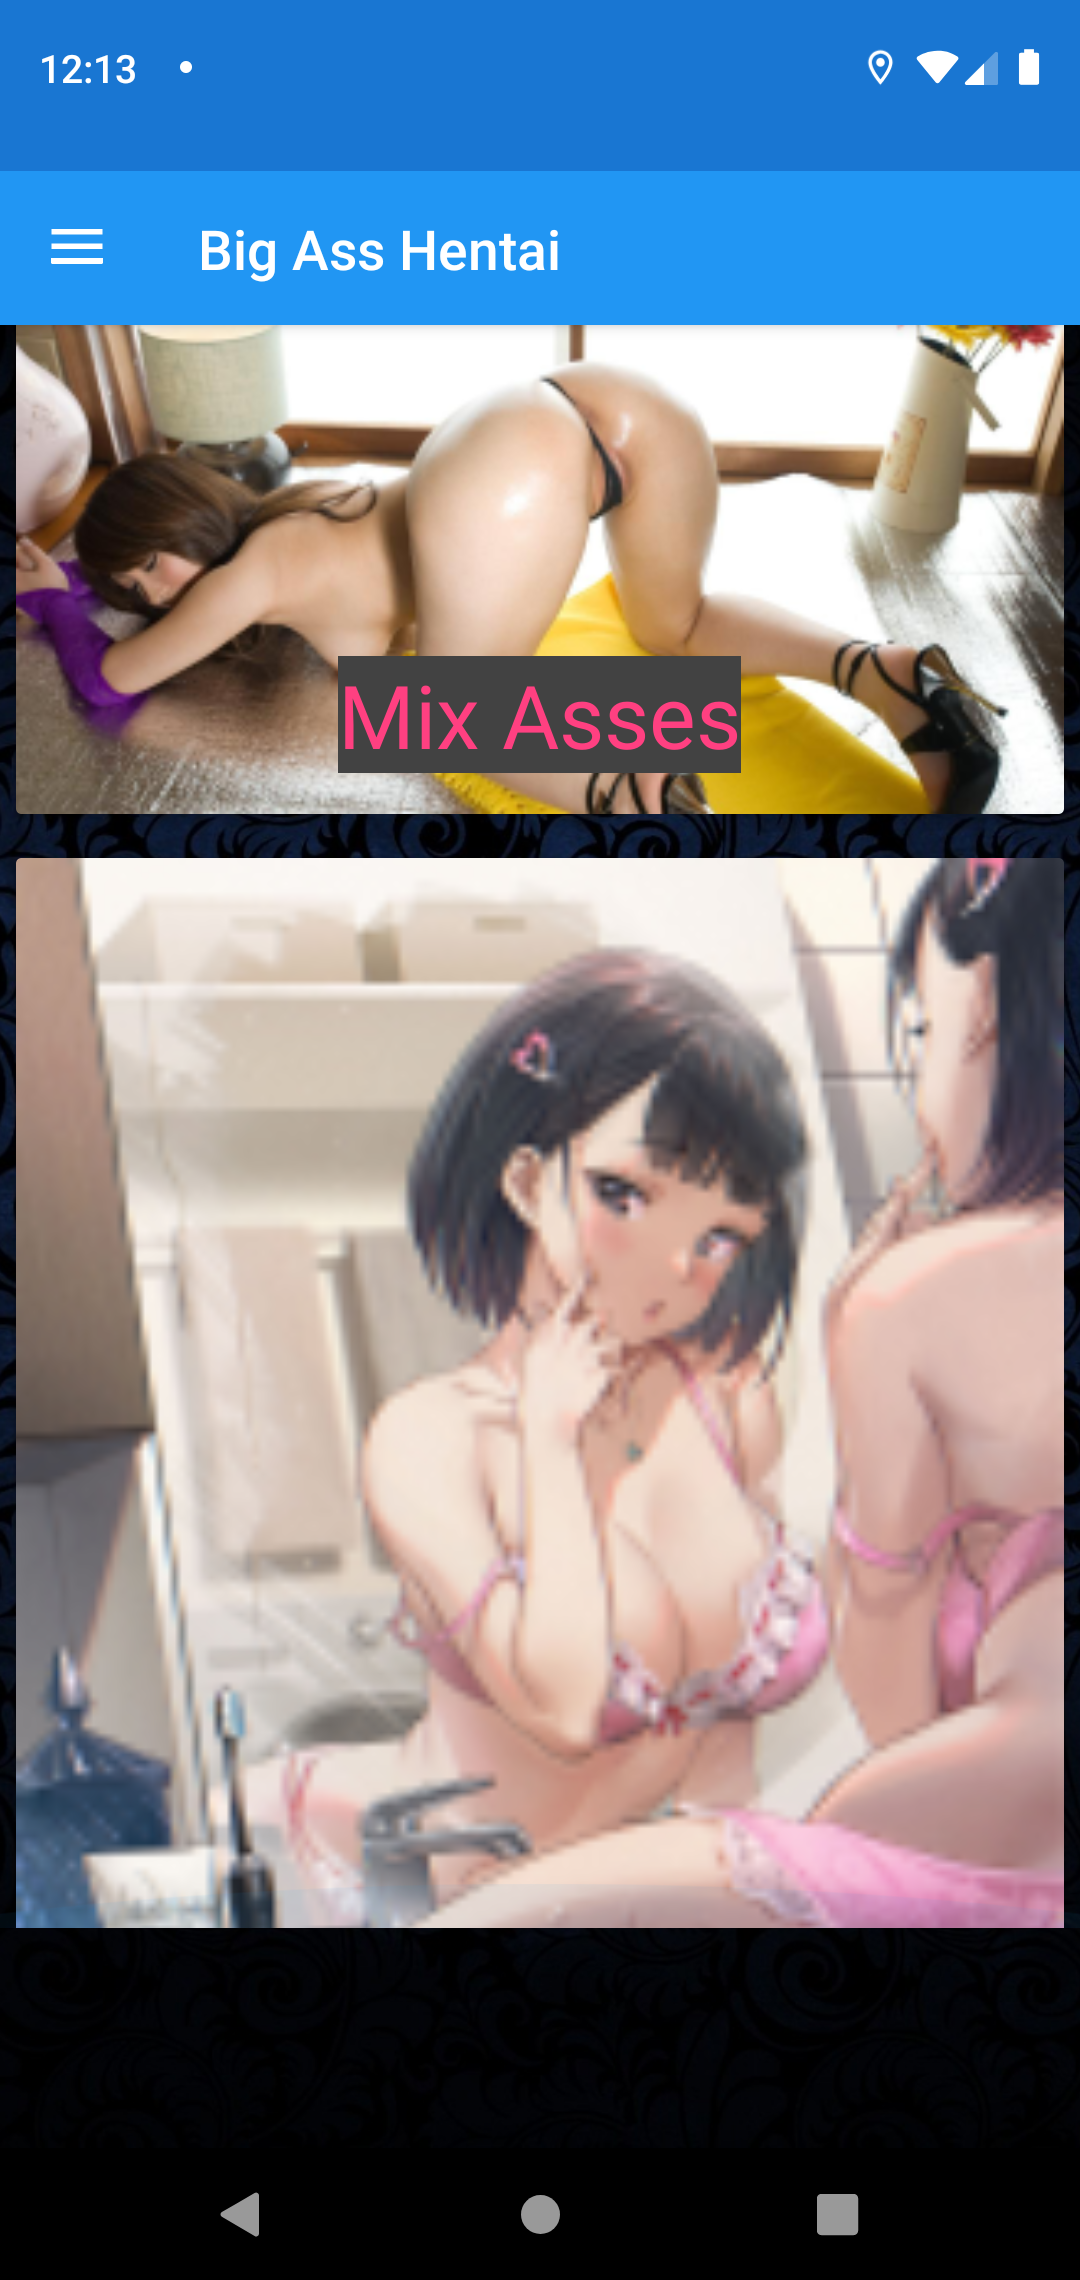 Hot Asses asses,android,porn,anime,pics,download,comics,sexy,sex,photos,app,futanari,apps,picture,nhentai,apk,hentai,pictures,big